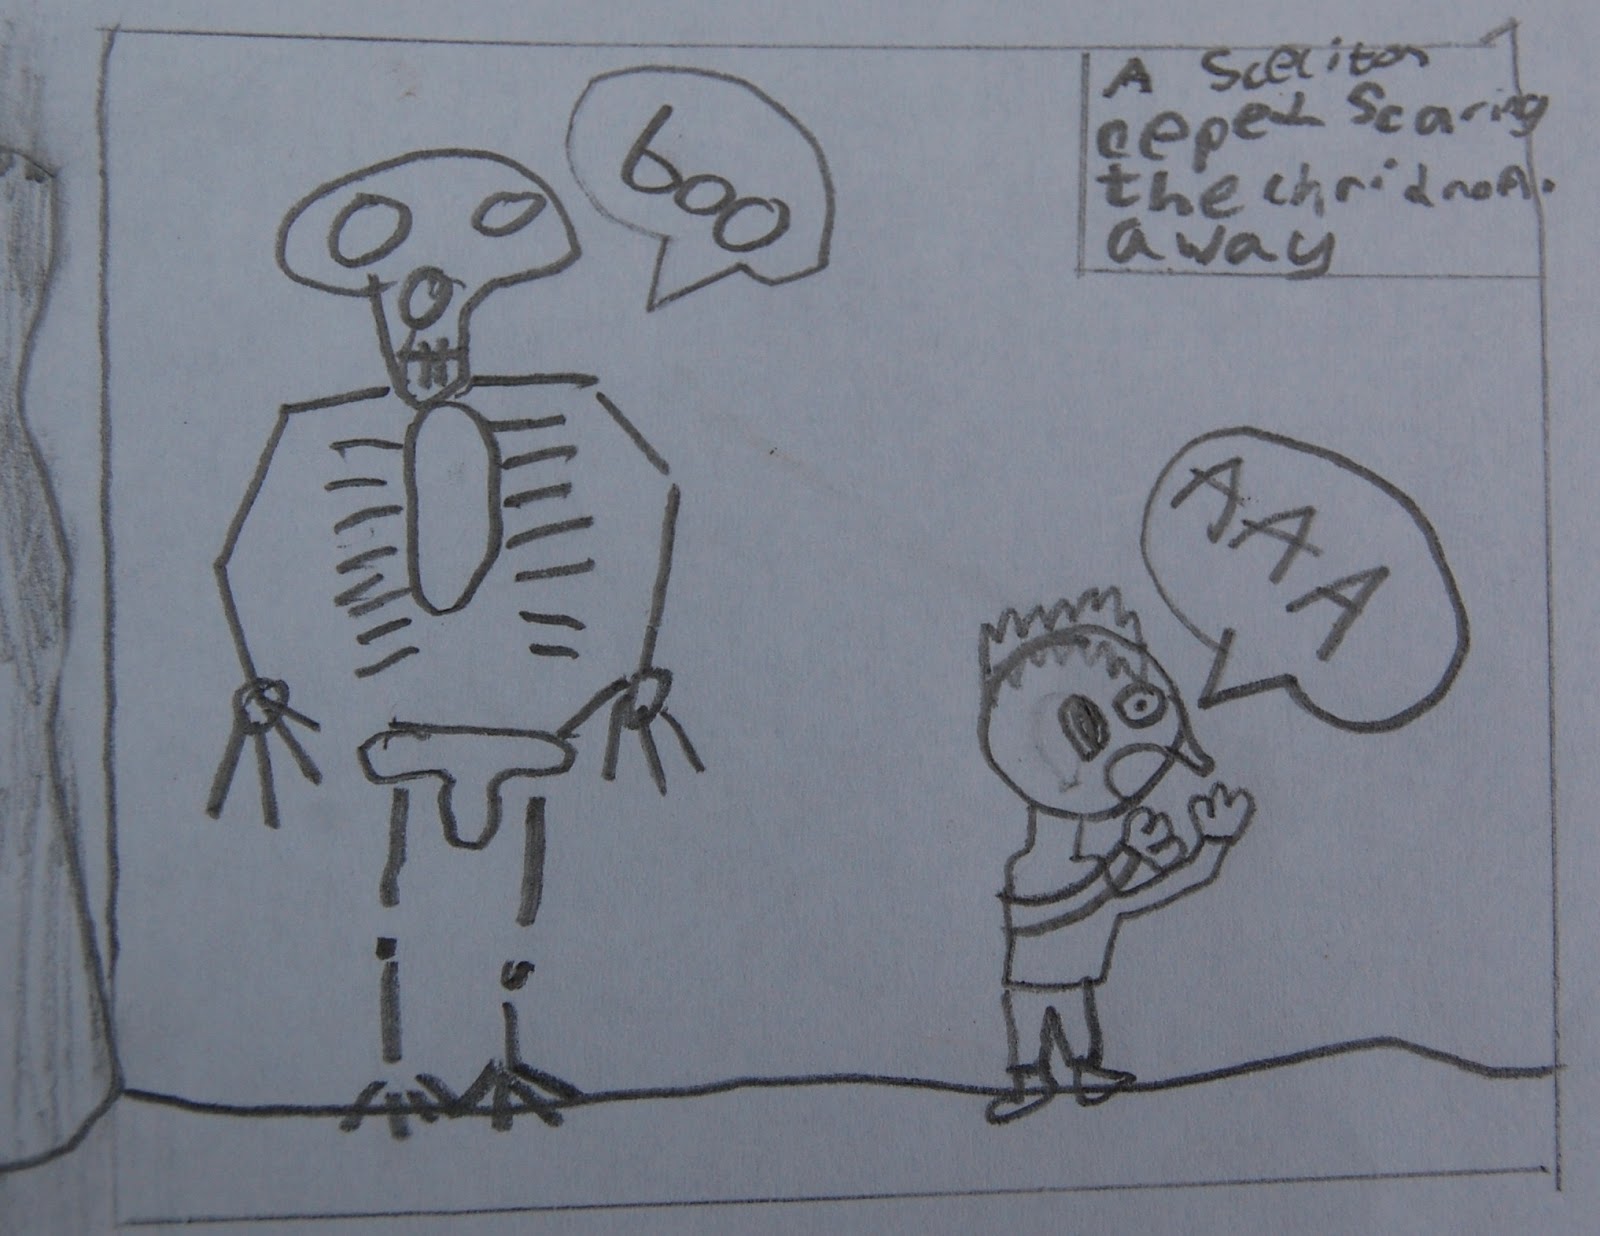 A skeleton kept scaring the children away